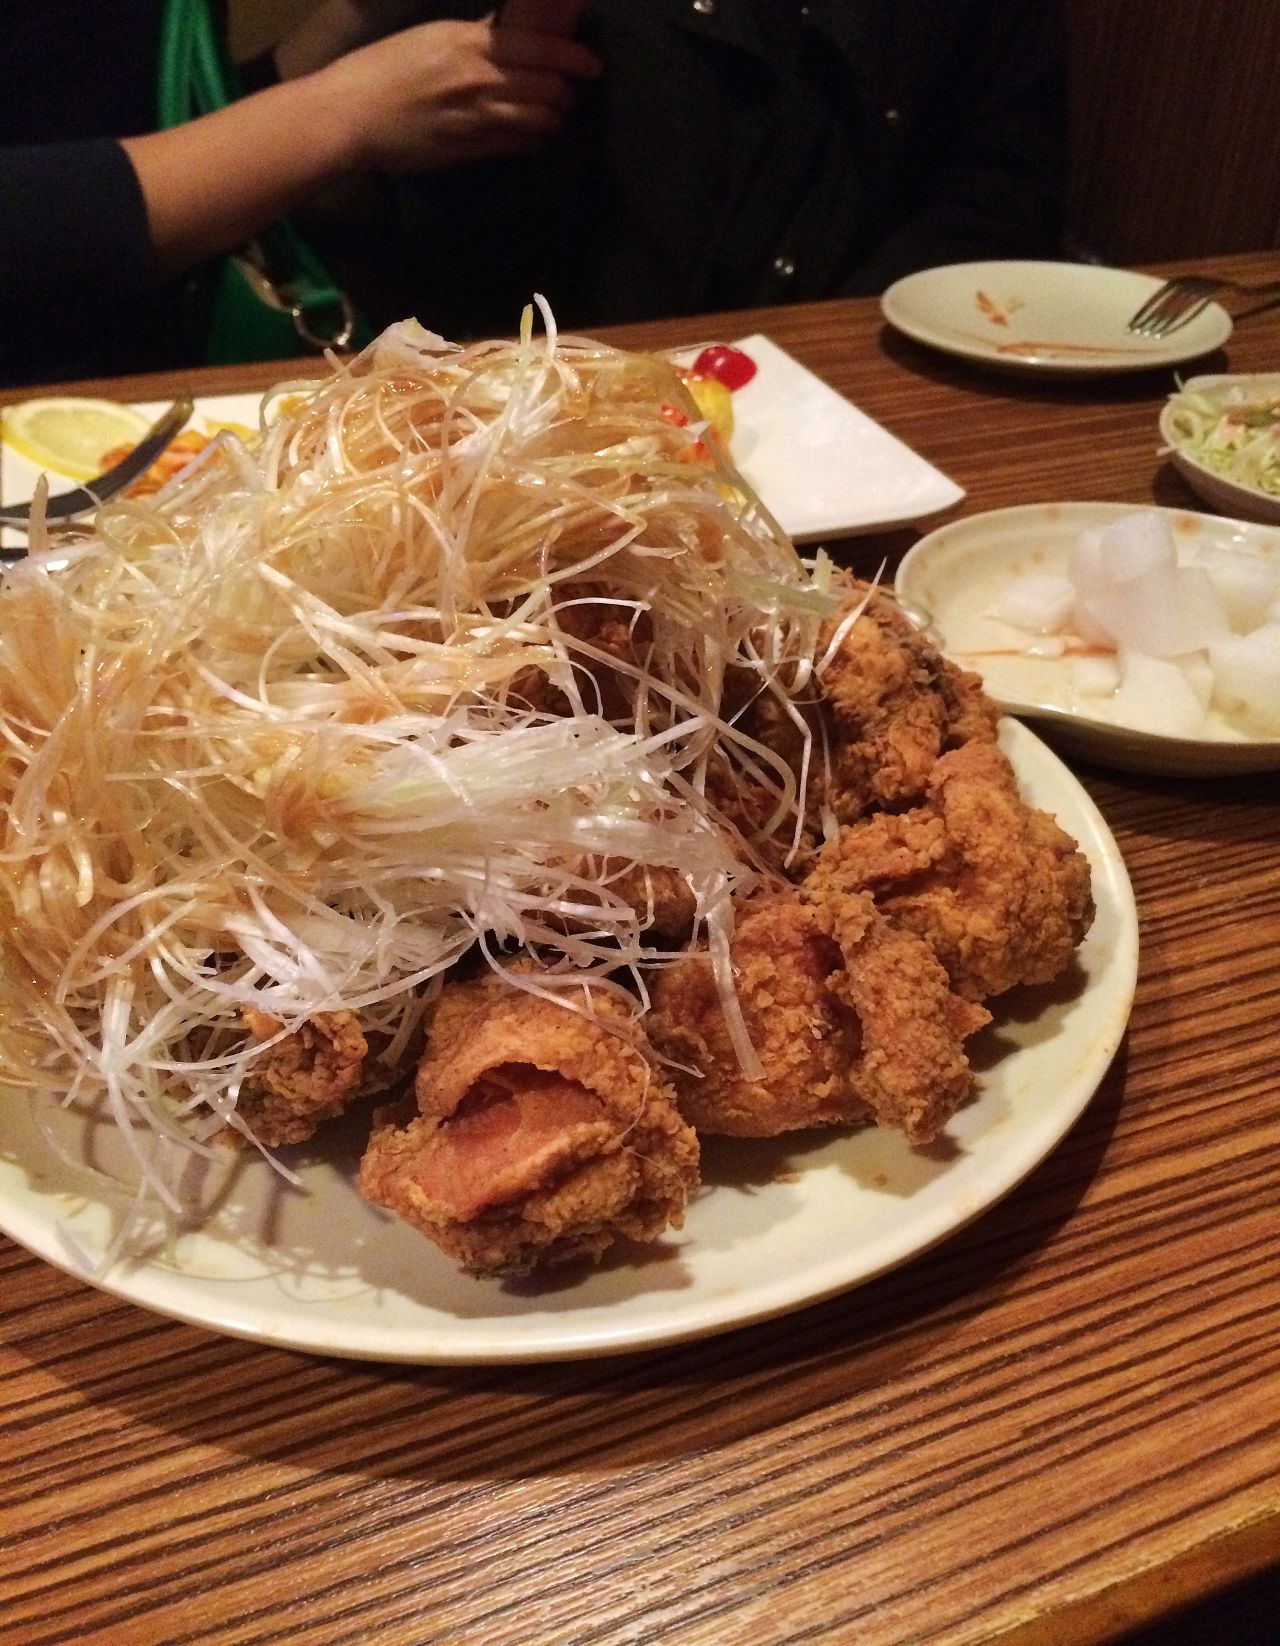 This portion of Padak chicken is from the Hong Kong branch of Chicken Hof & Soju, a popular Korean chicken restaurant.